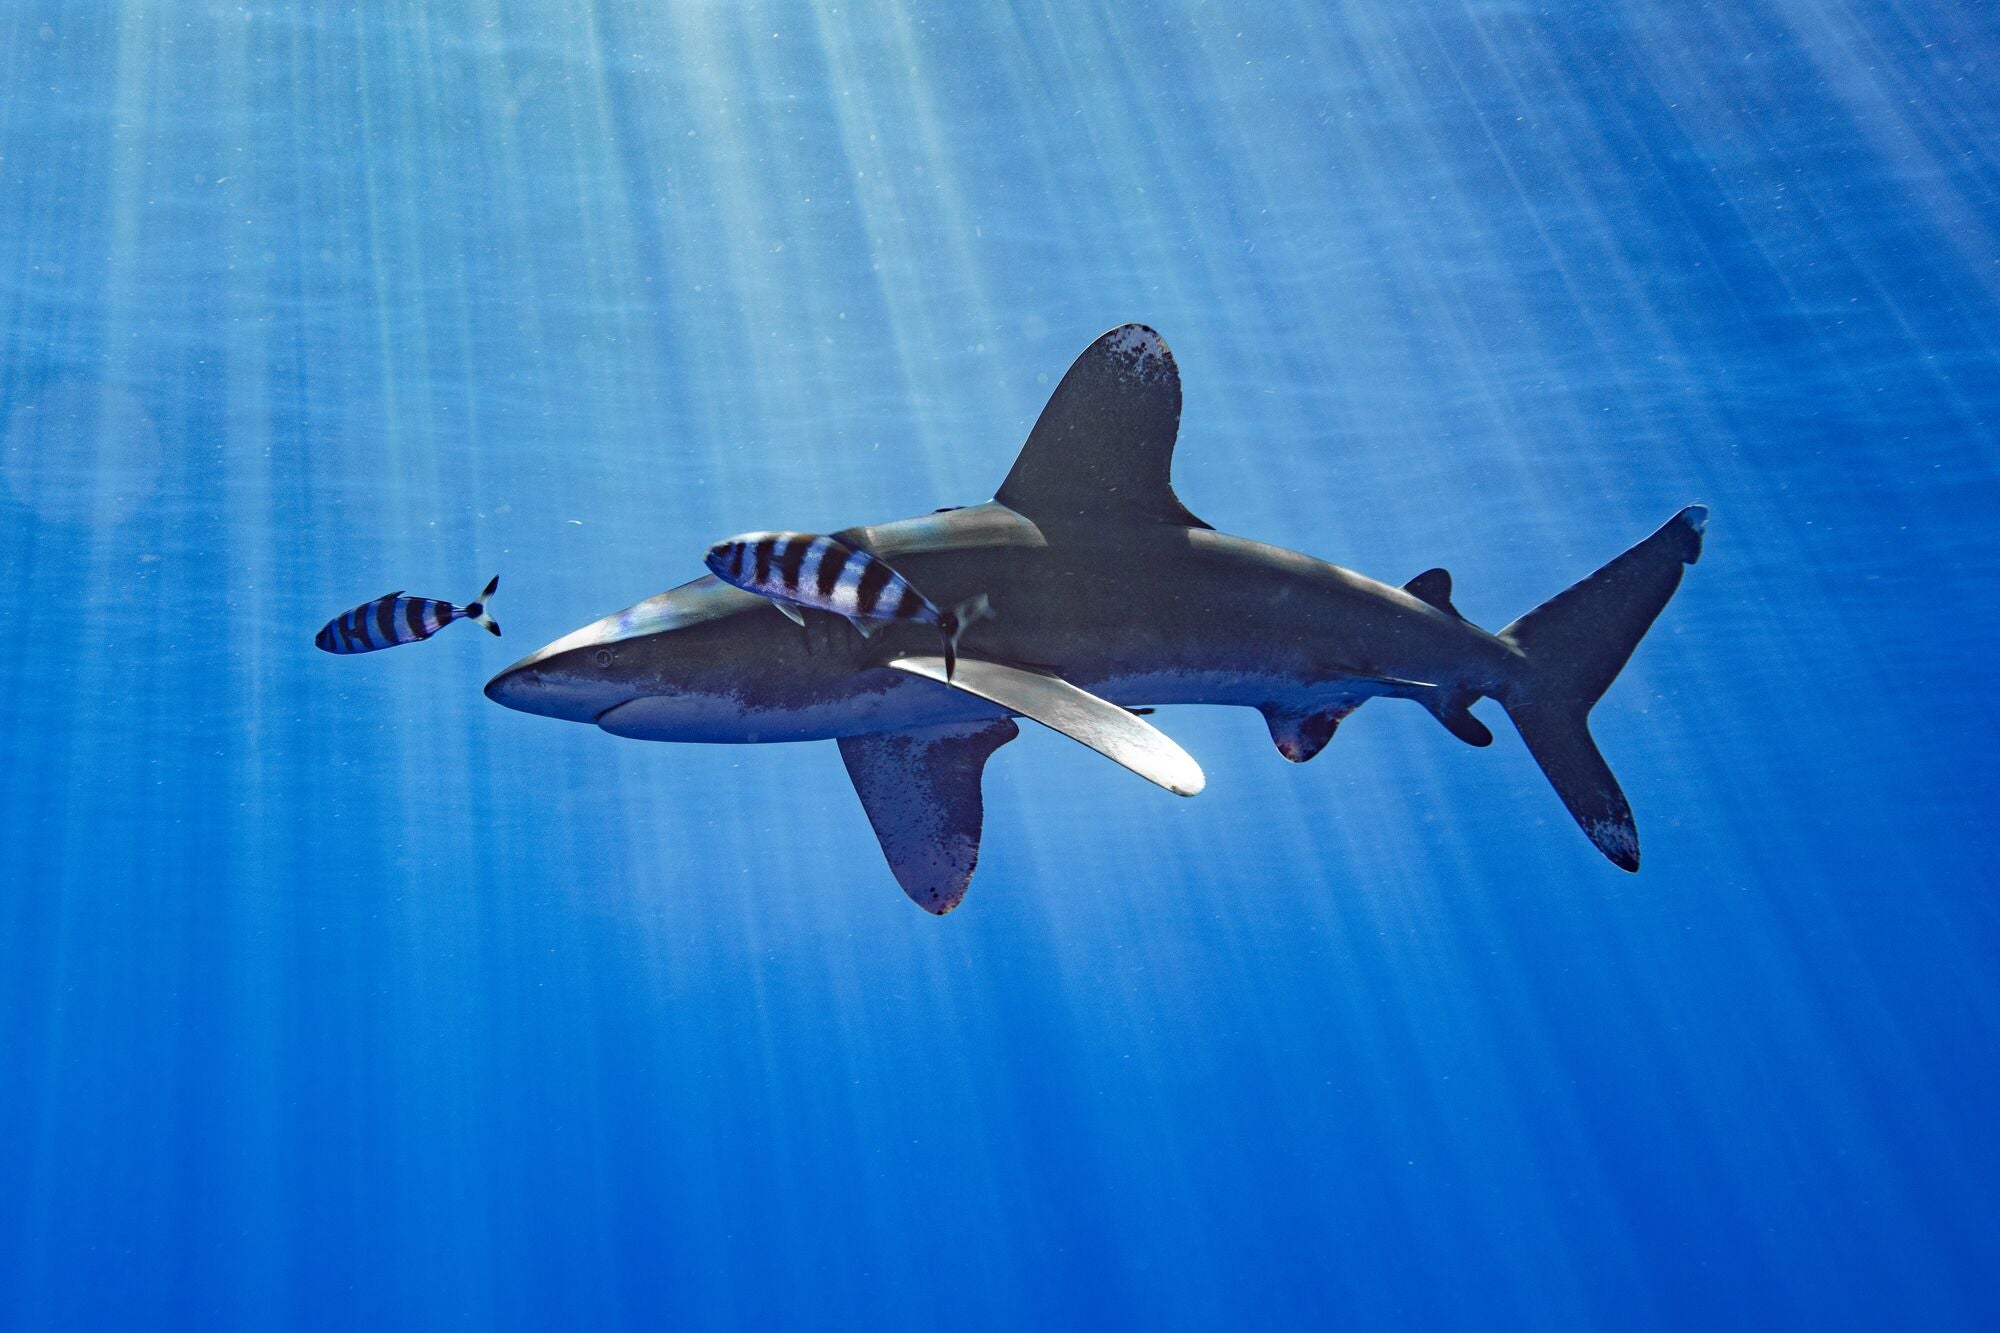 An oceanic whitetip shark (Carcharhinus longimanus) swims in the waters off Hawaii.